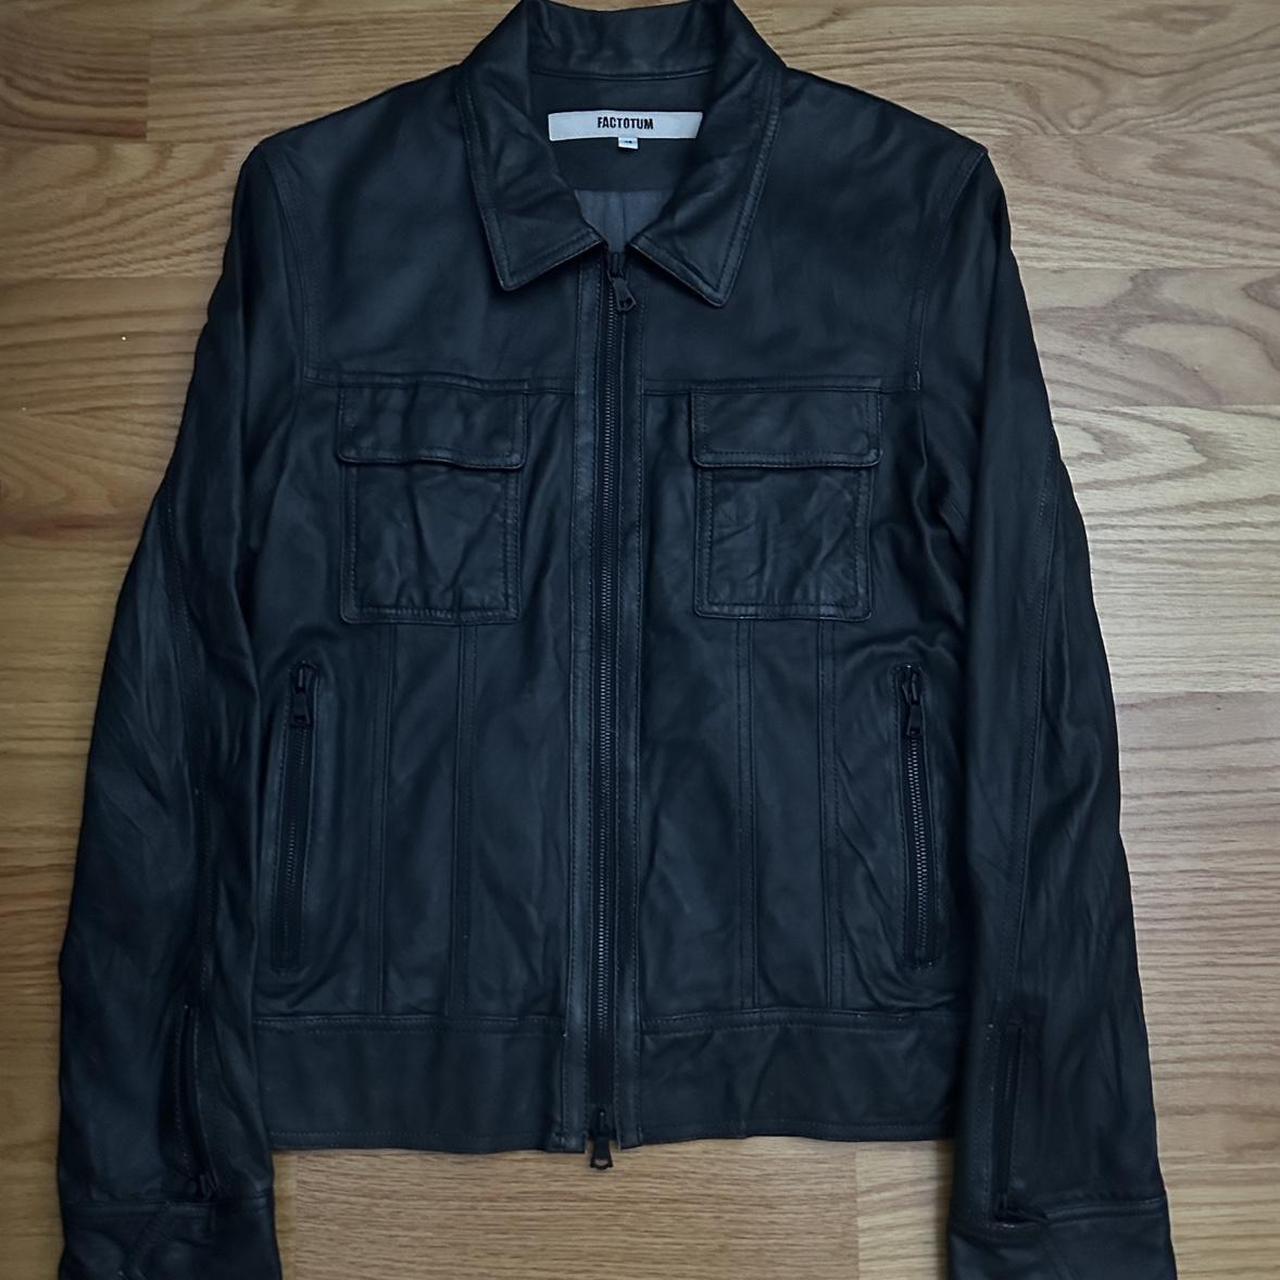 factotum leather jacket